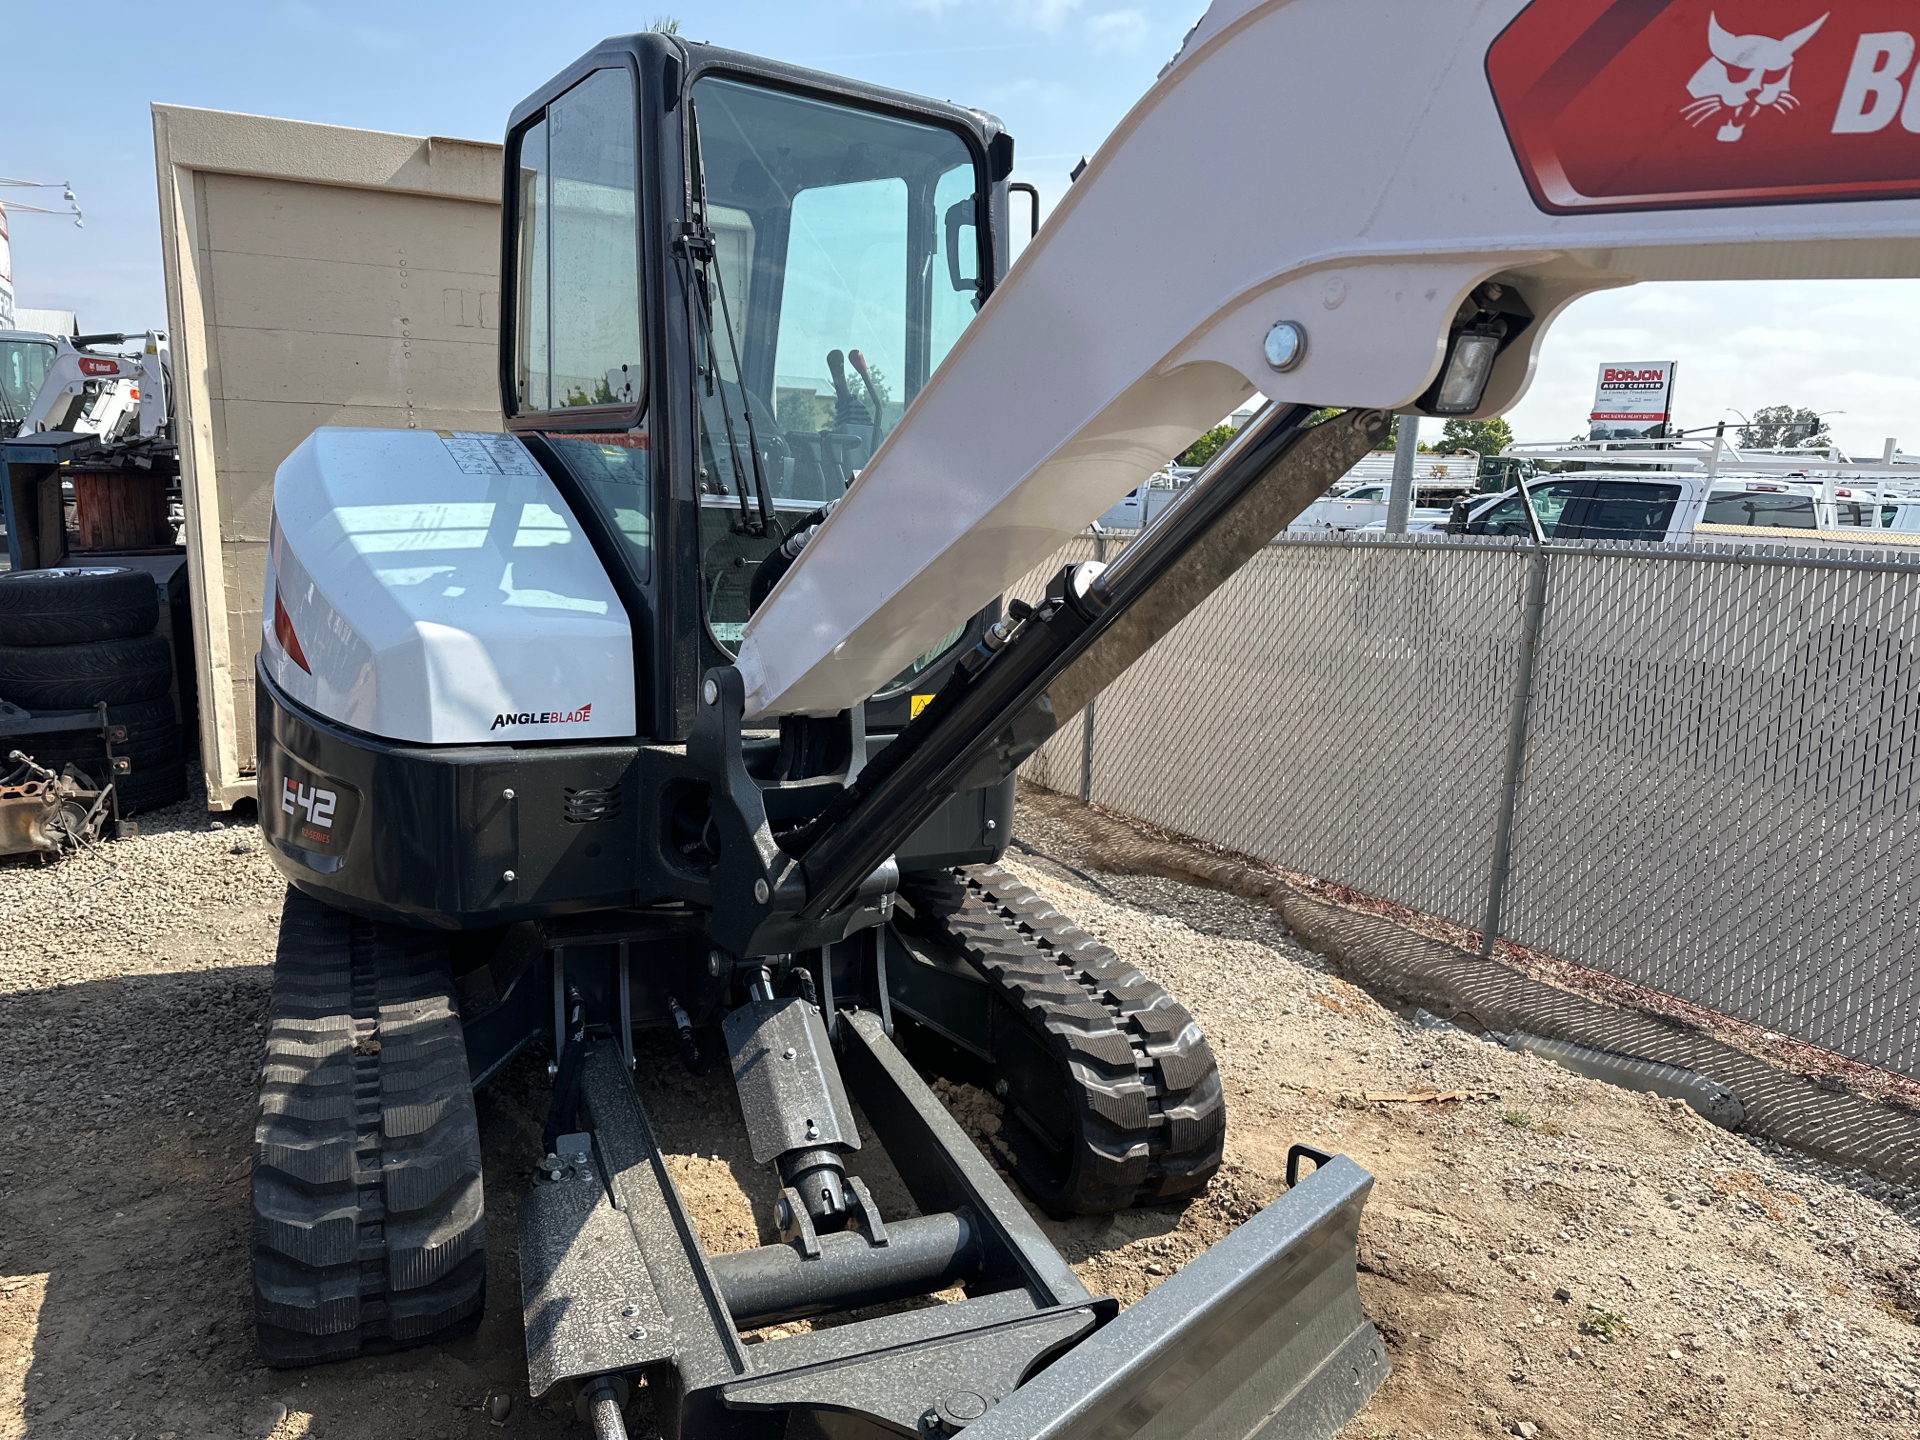 2023 Bobcat E42 R2-Series Bobcat Compact Excavator in Paso Robles, California - Photo 3